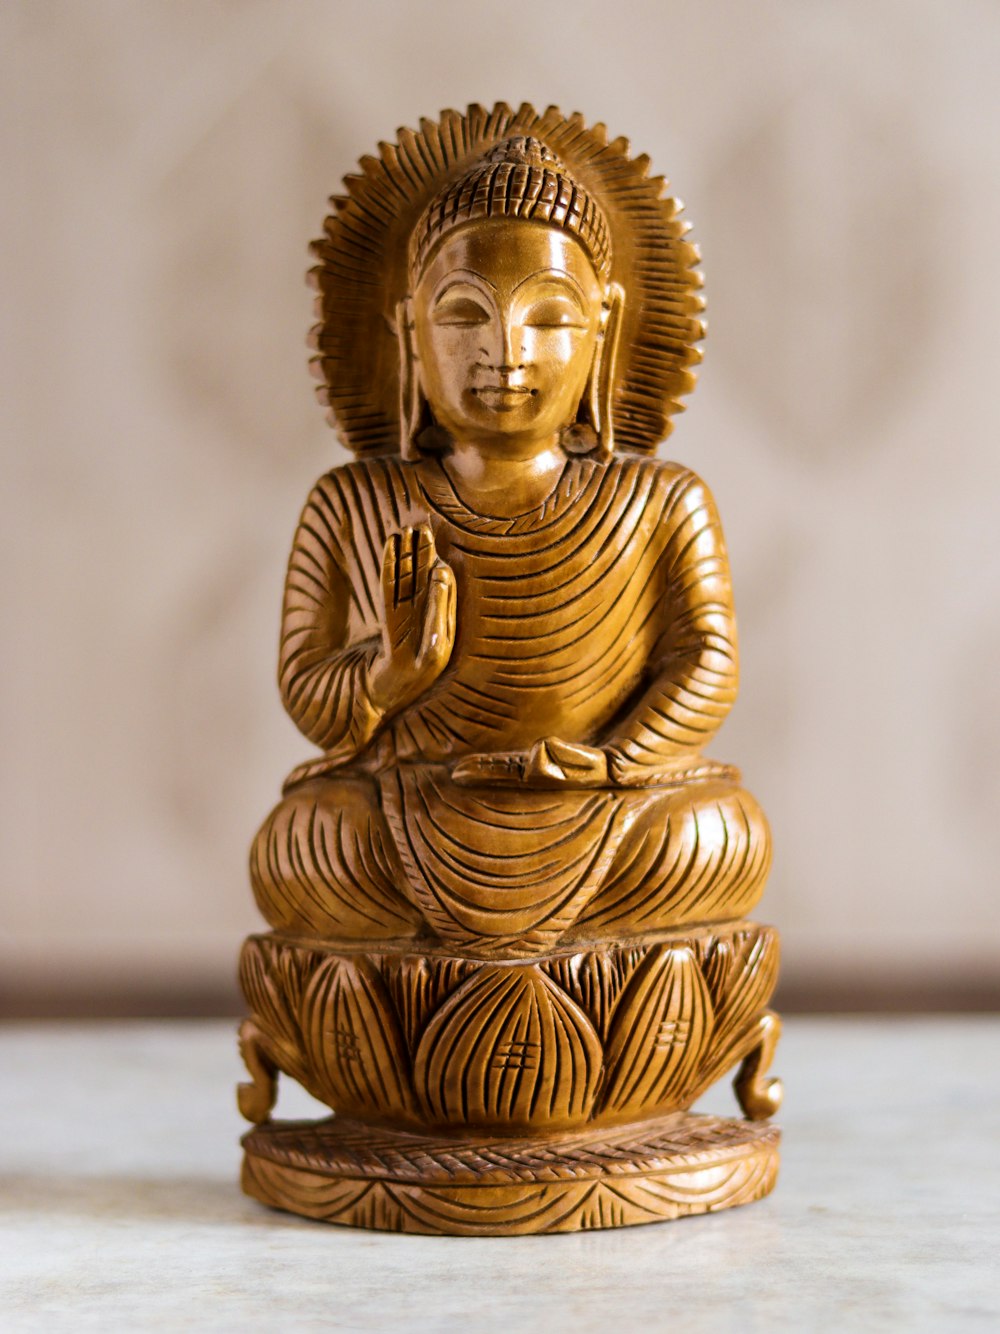 gold buddha figurine on white table